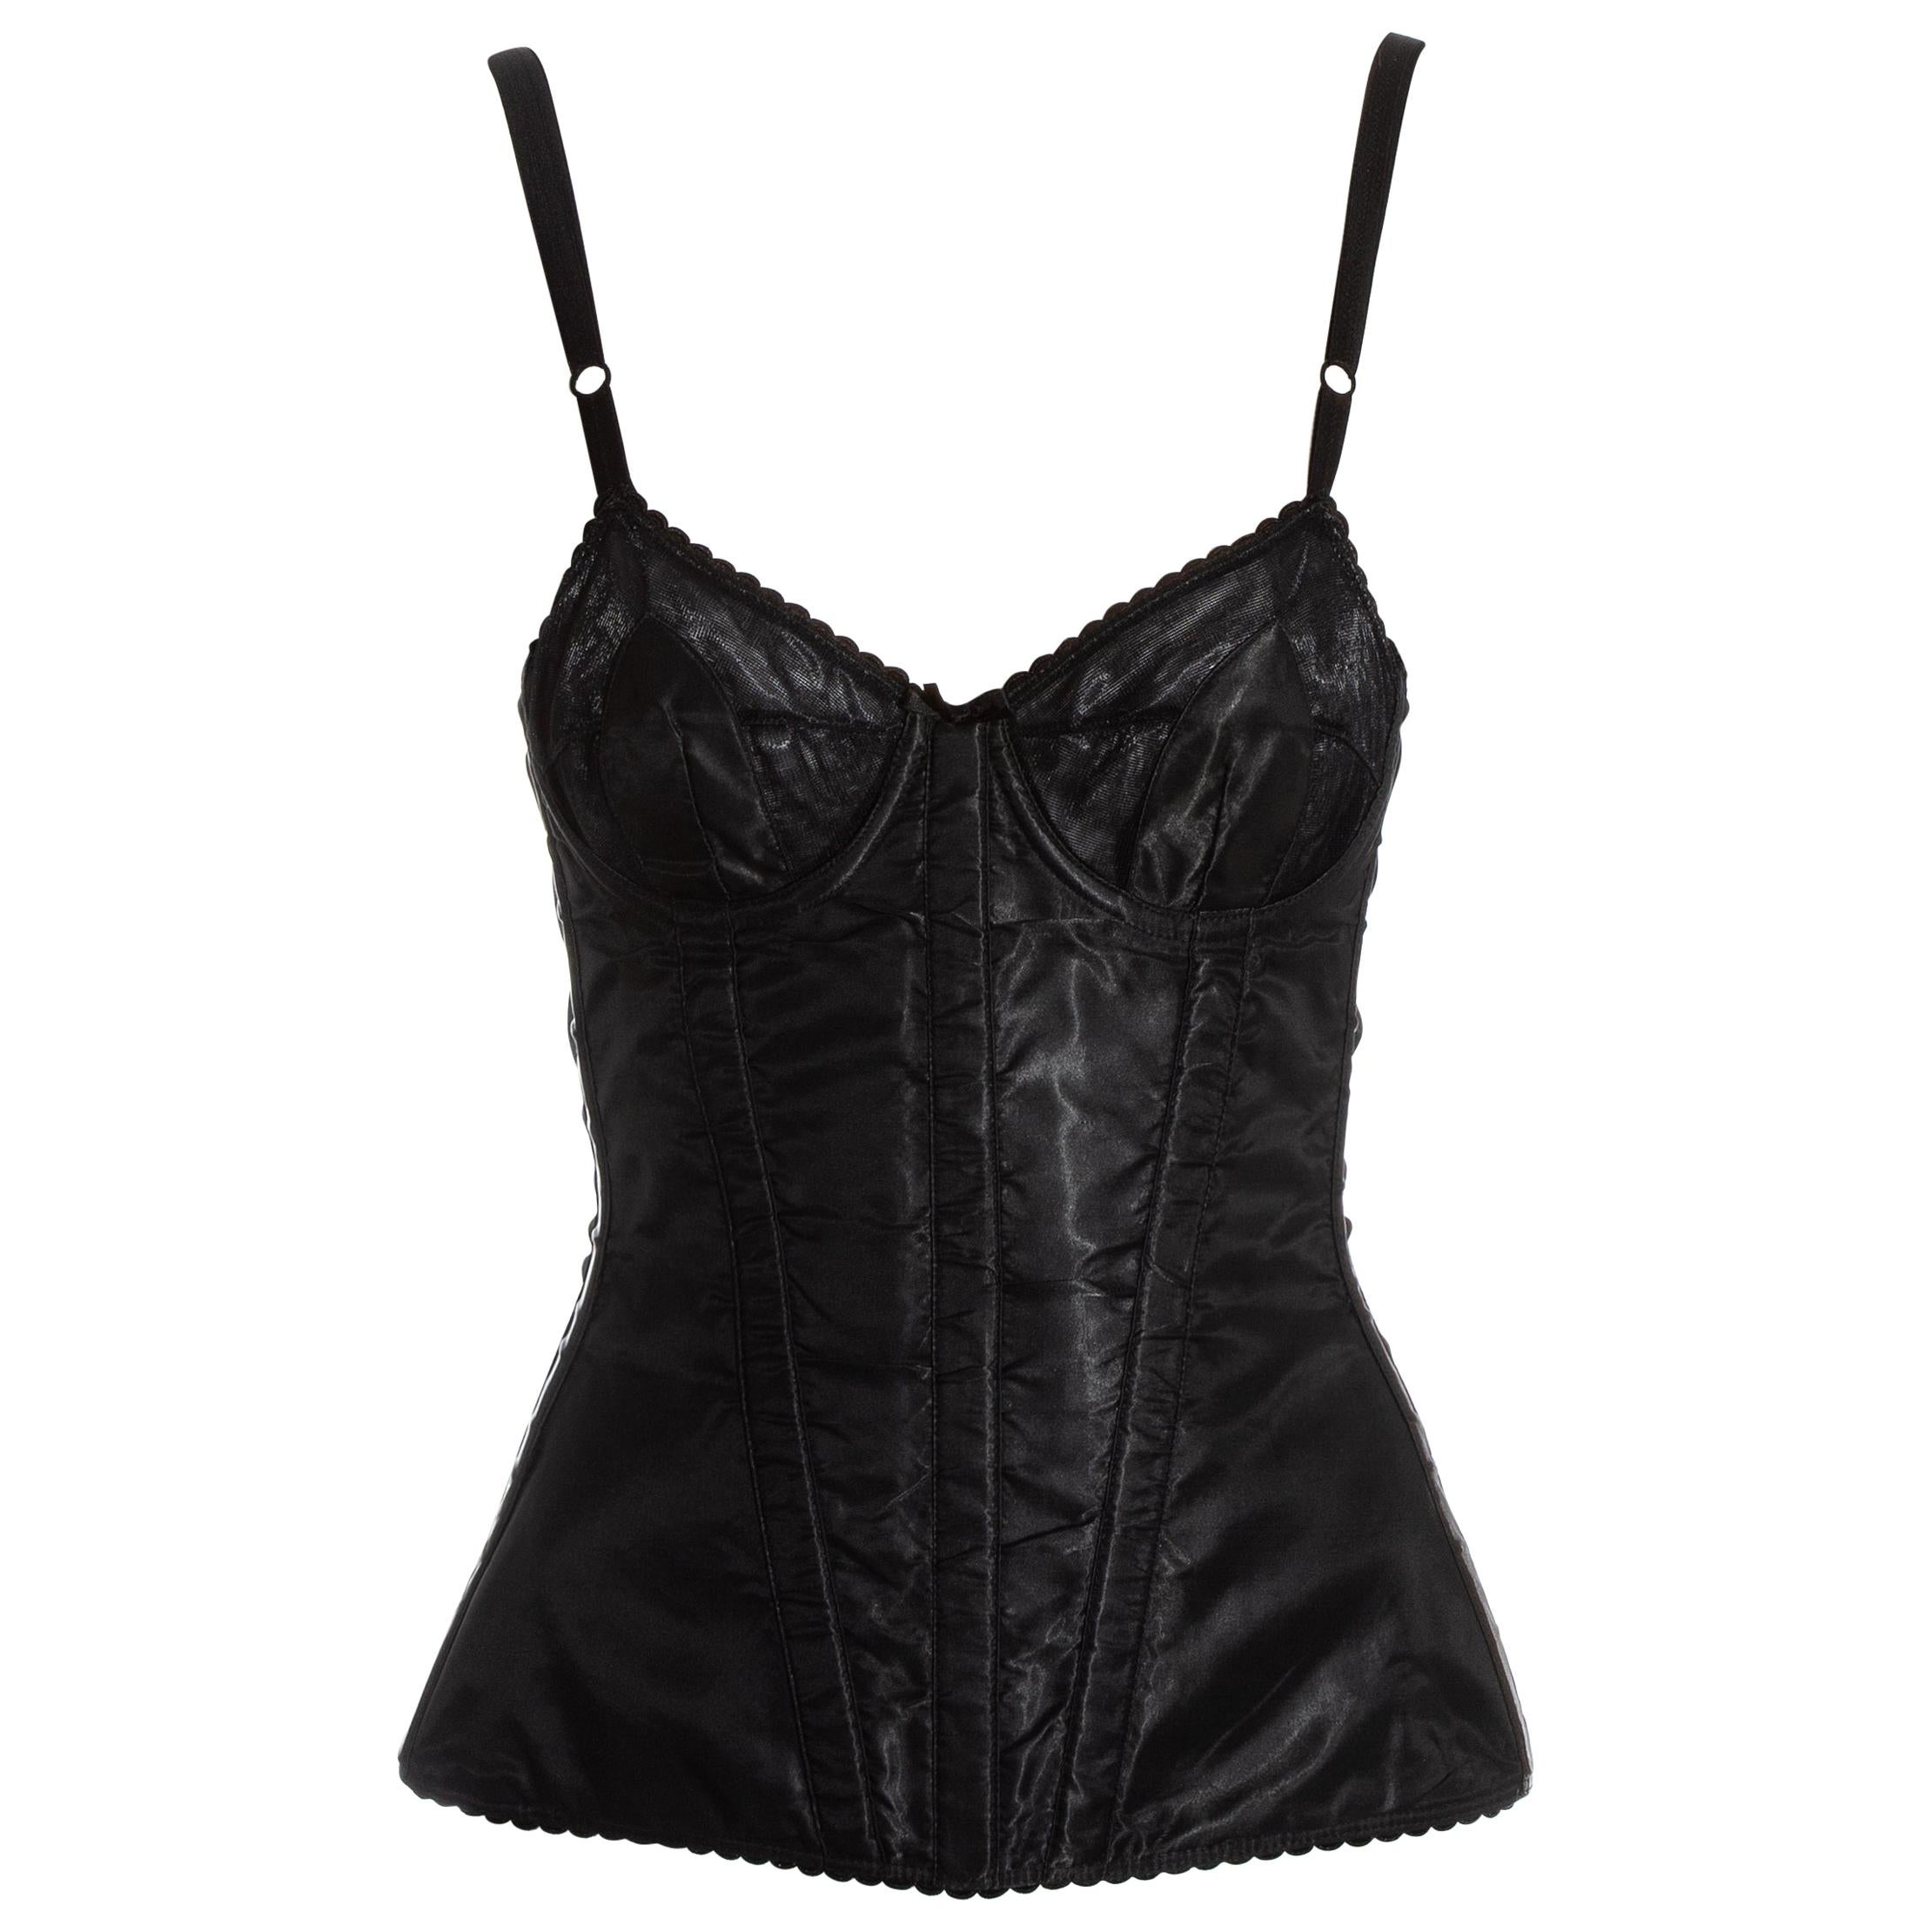 Dolce & Gabbana black satin boned evening corset, c. 1990s